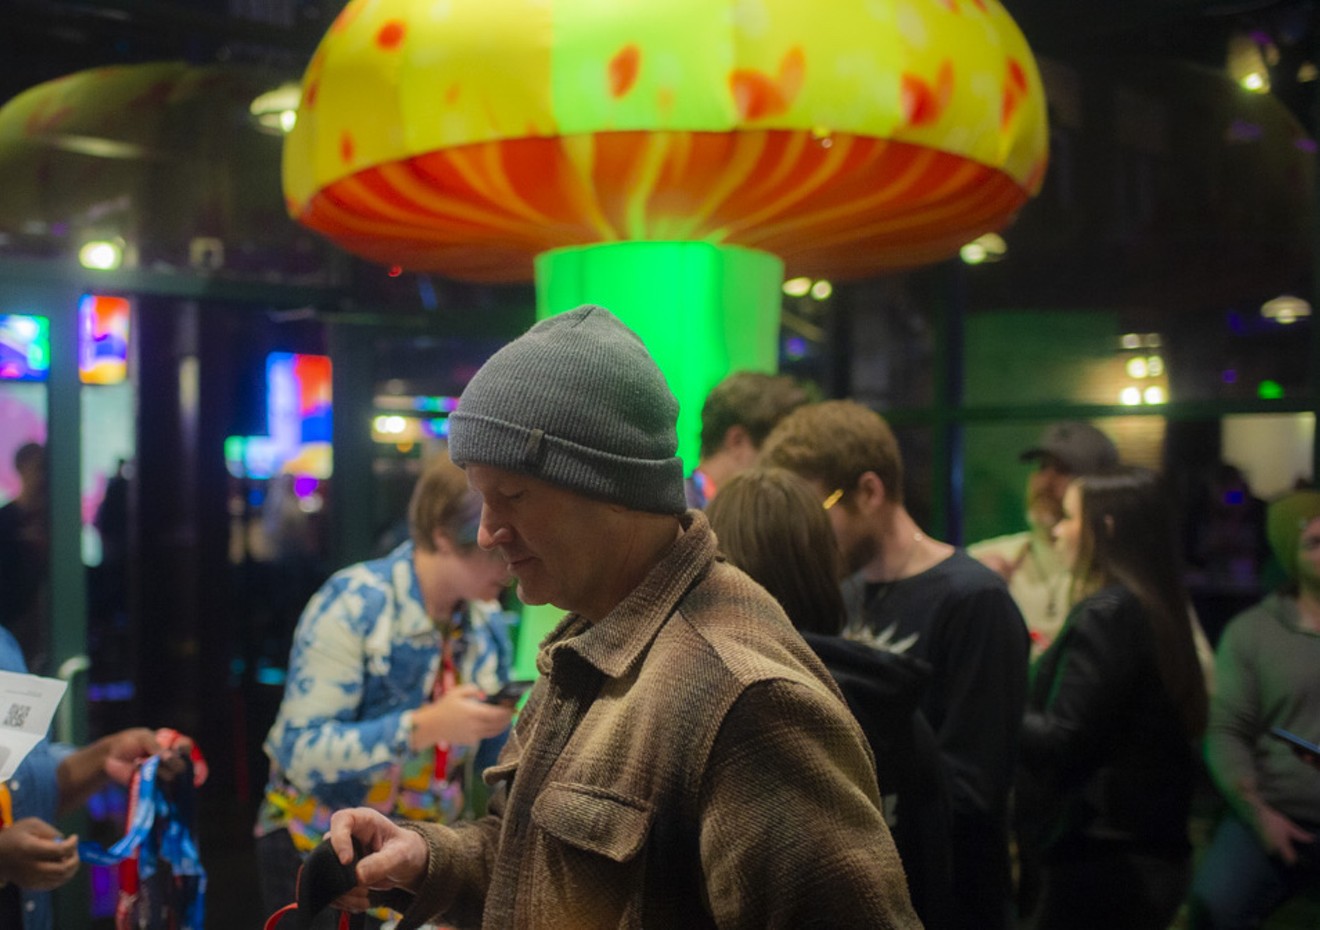 Denver Shroom Fest promises live music, food trucks, vendors and mushrooms.